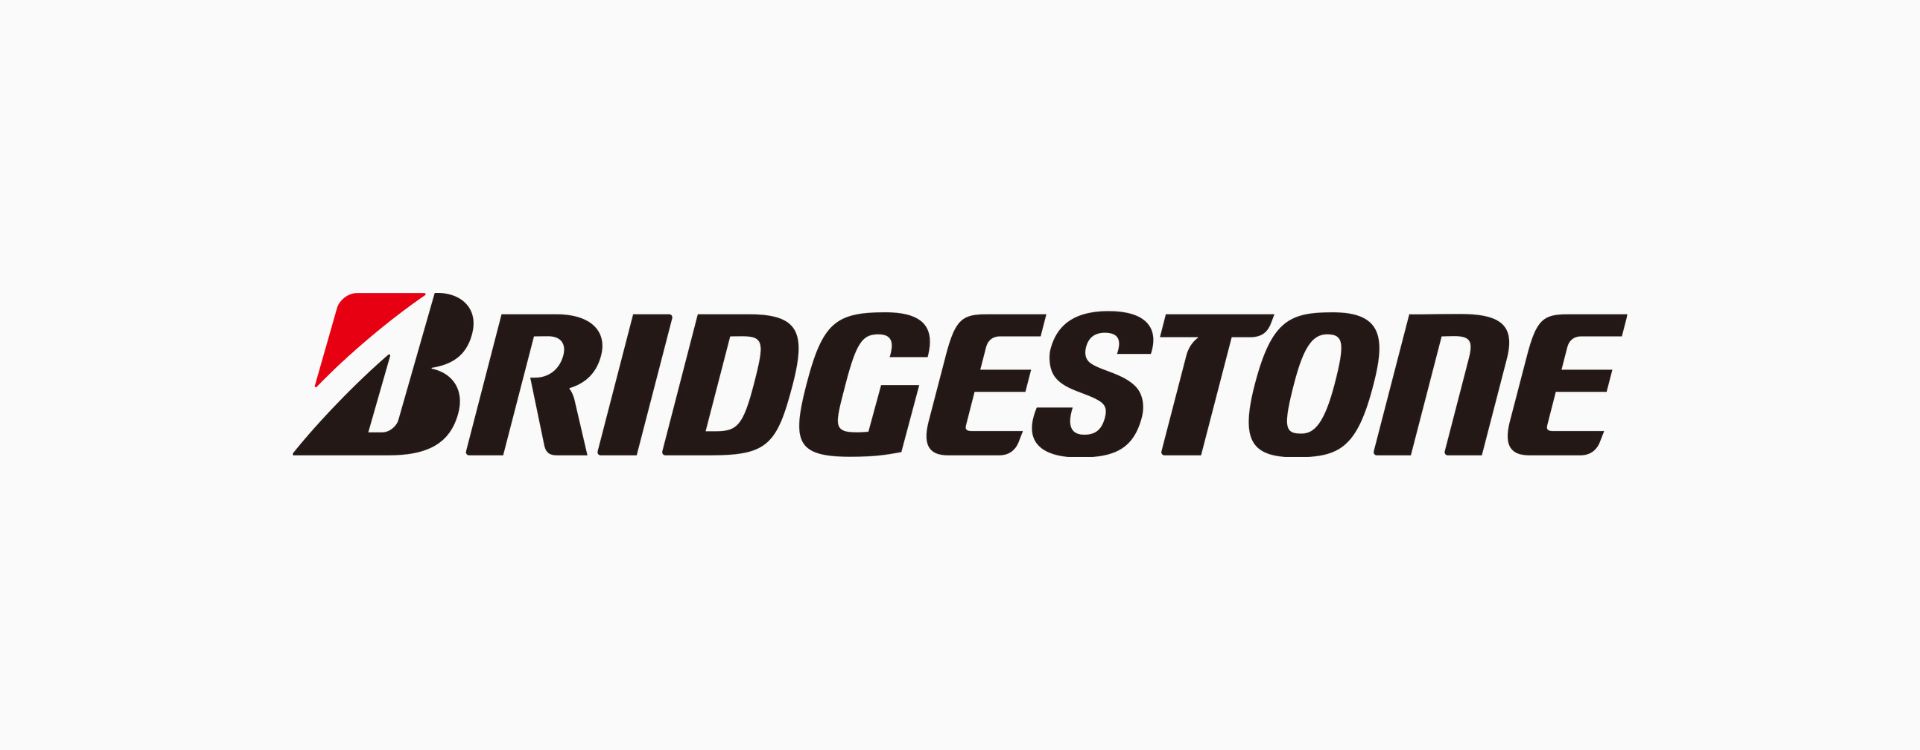 The Bridgestone Truck Tyres logo on a light grey background.